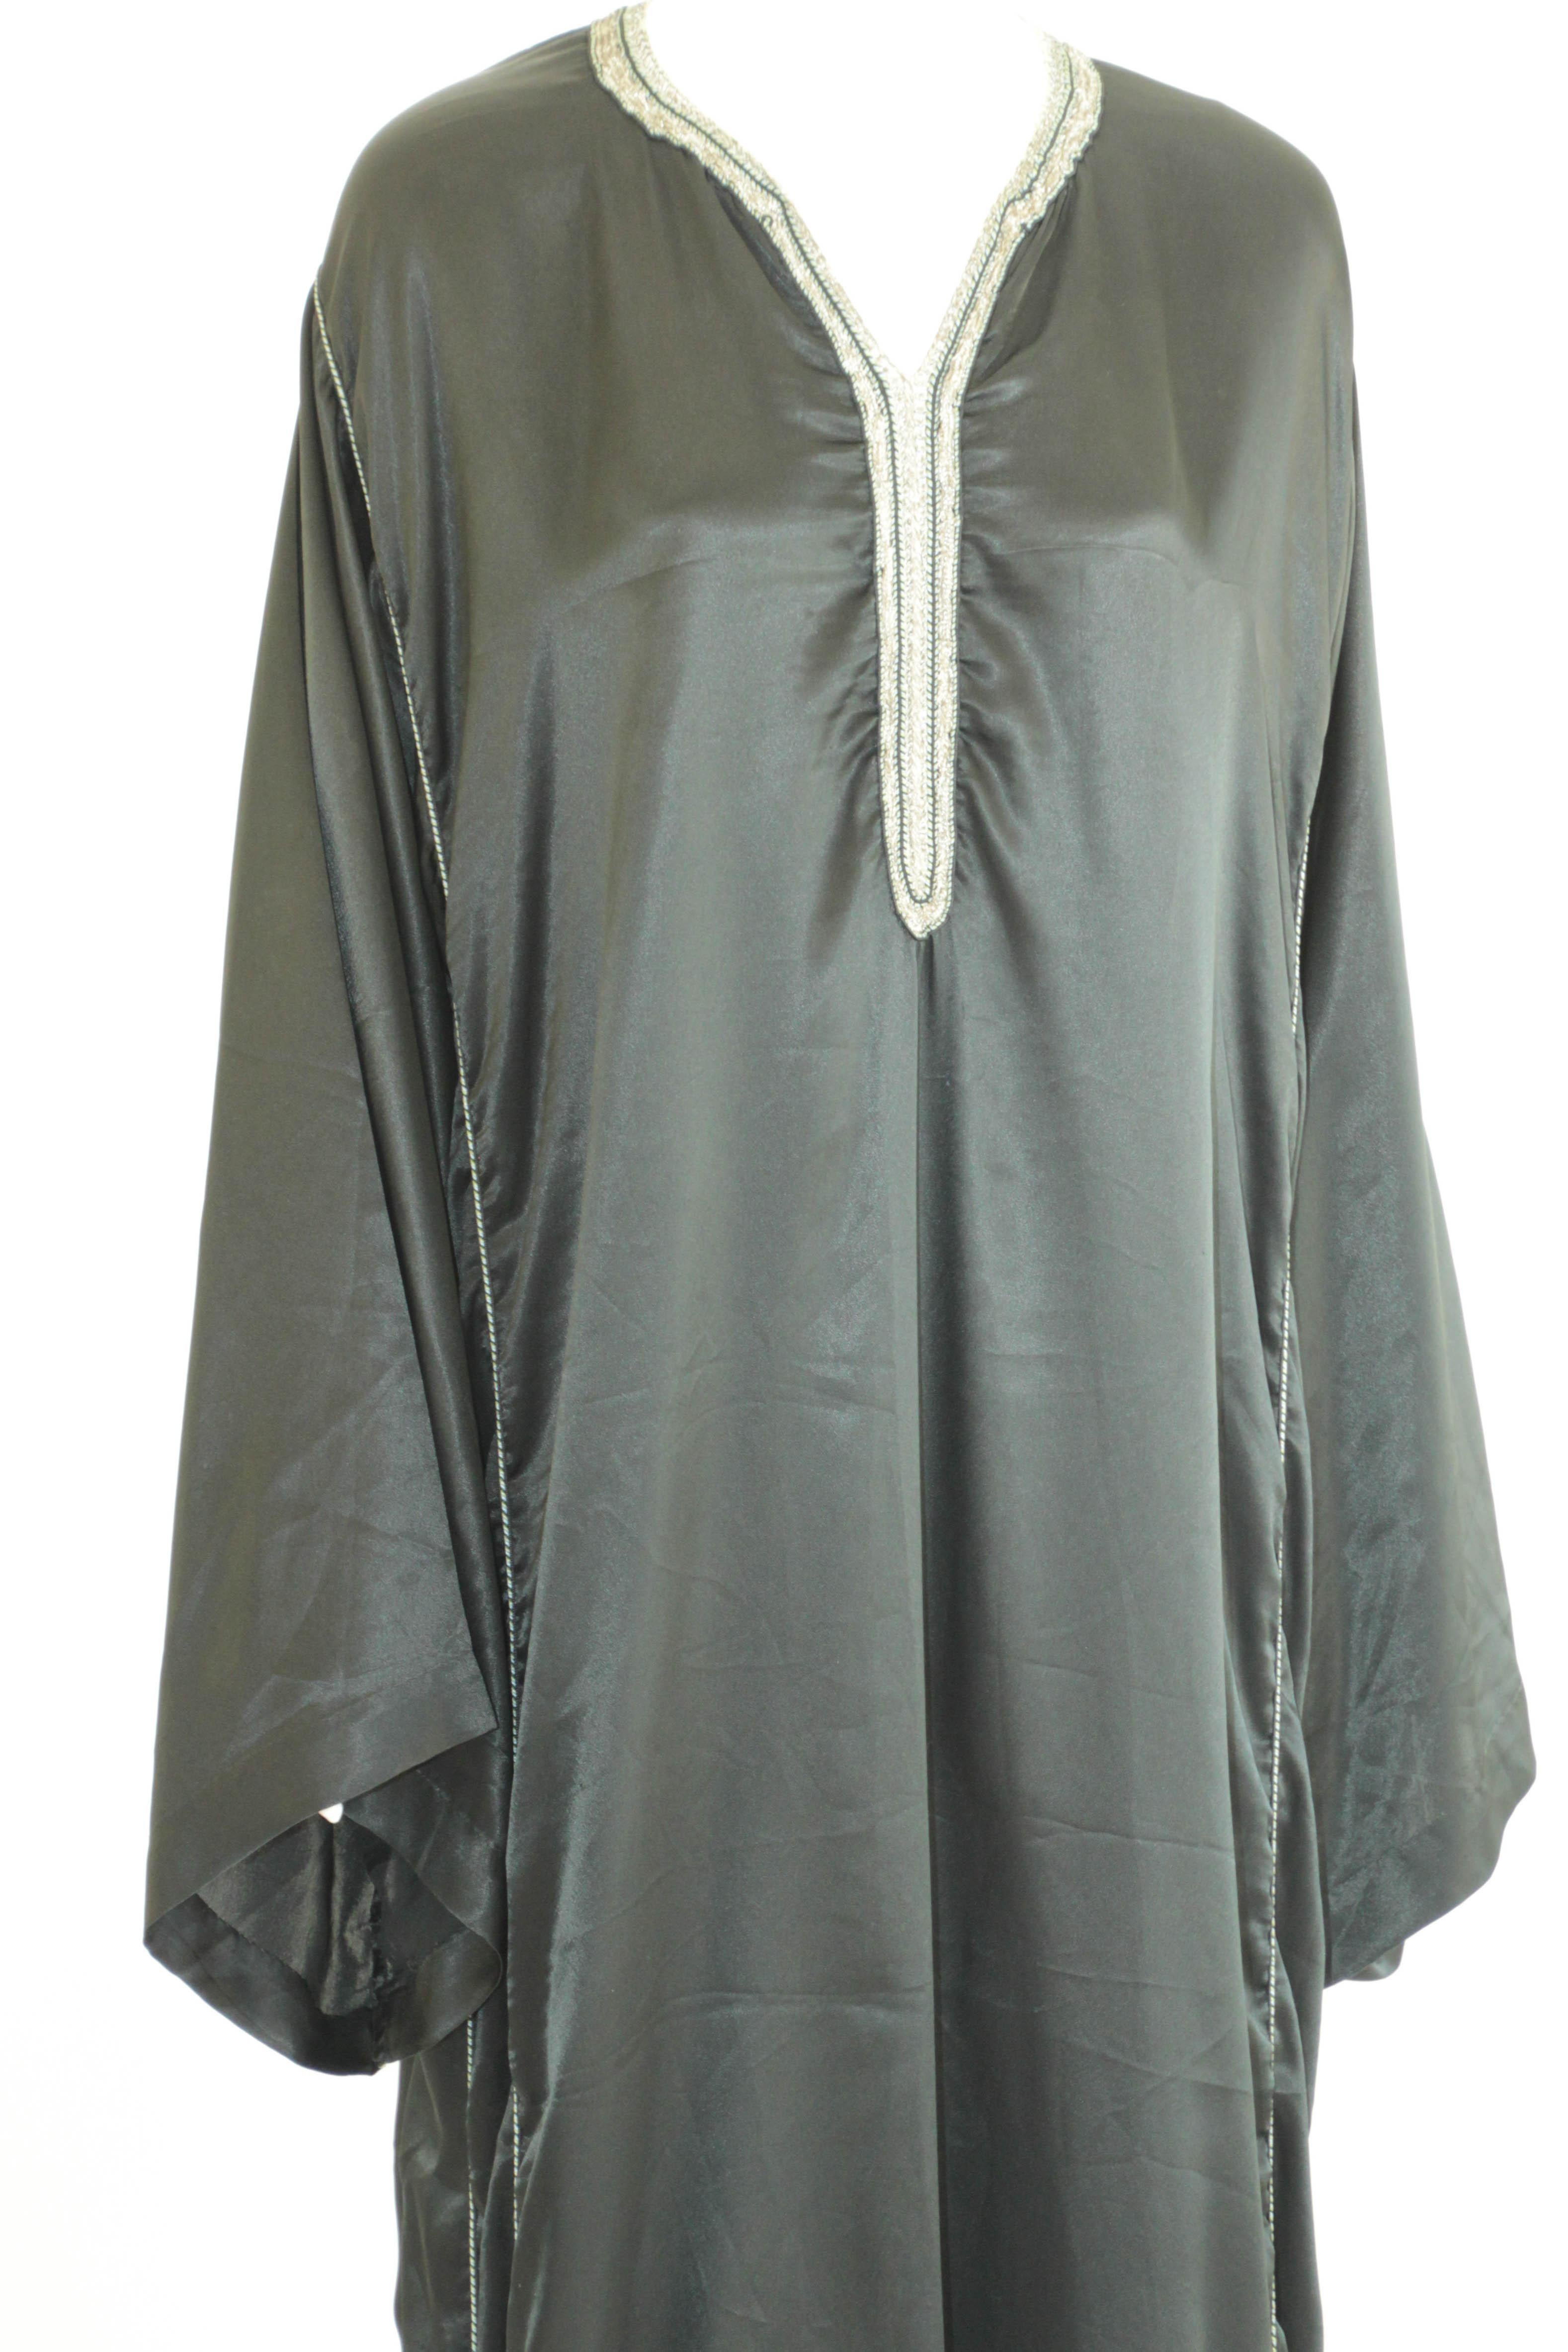 Moroccan Black Sequin Fabric Caftan Set 9